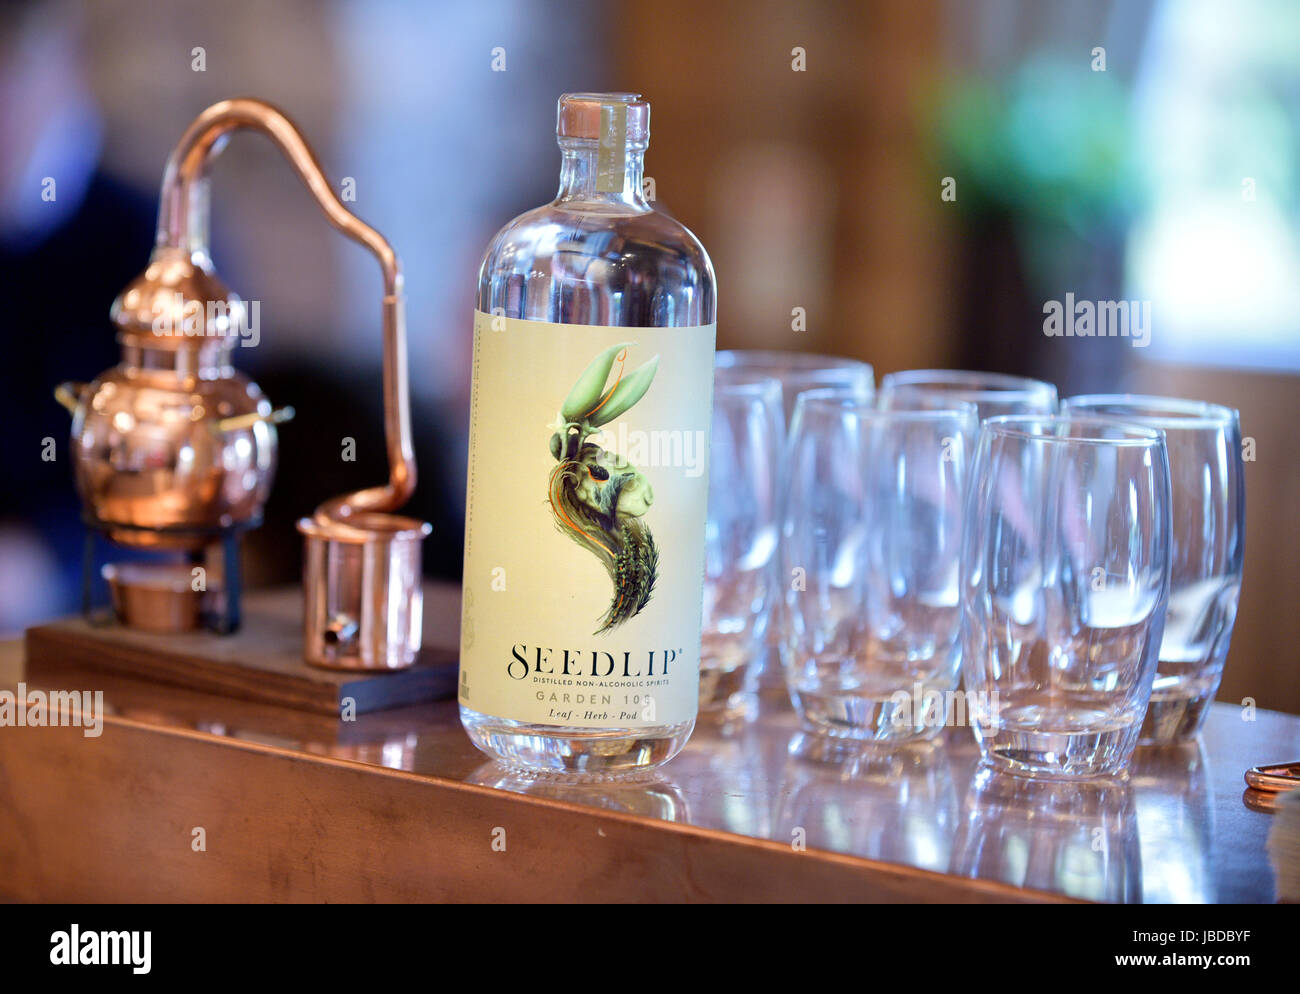 non-alcoholic spirit alternative from Seedlip, a “distilled non-alcoholic spirit” Stock Photo